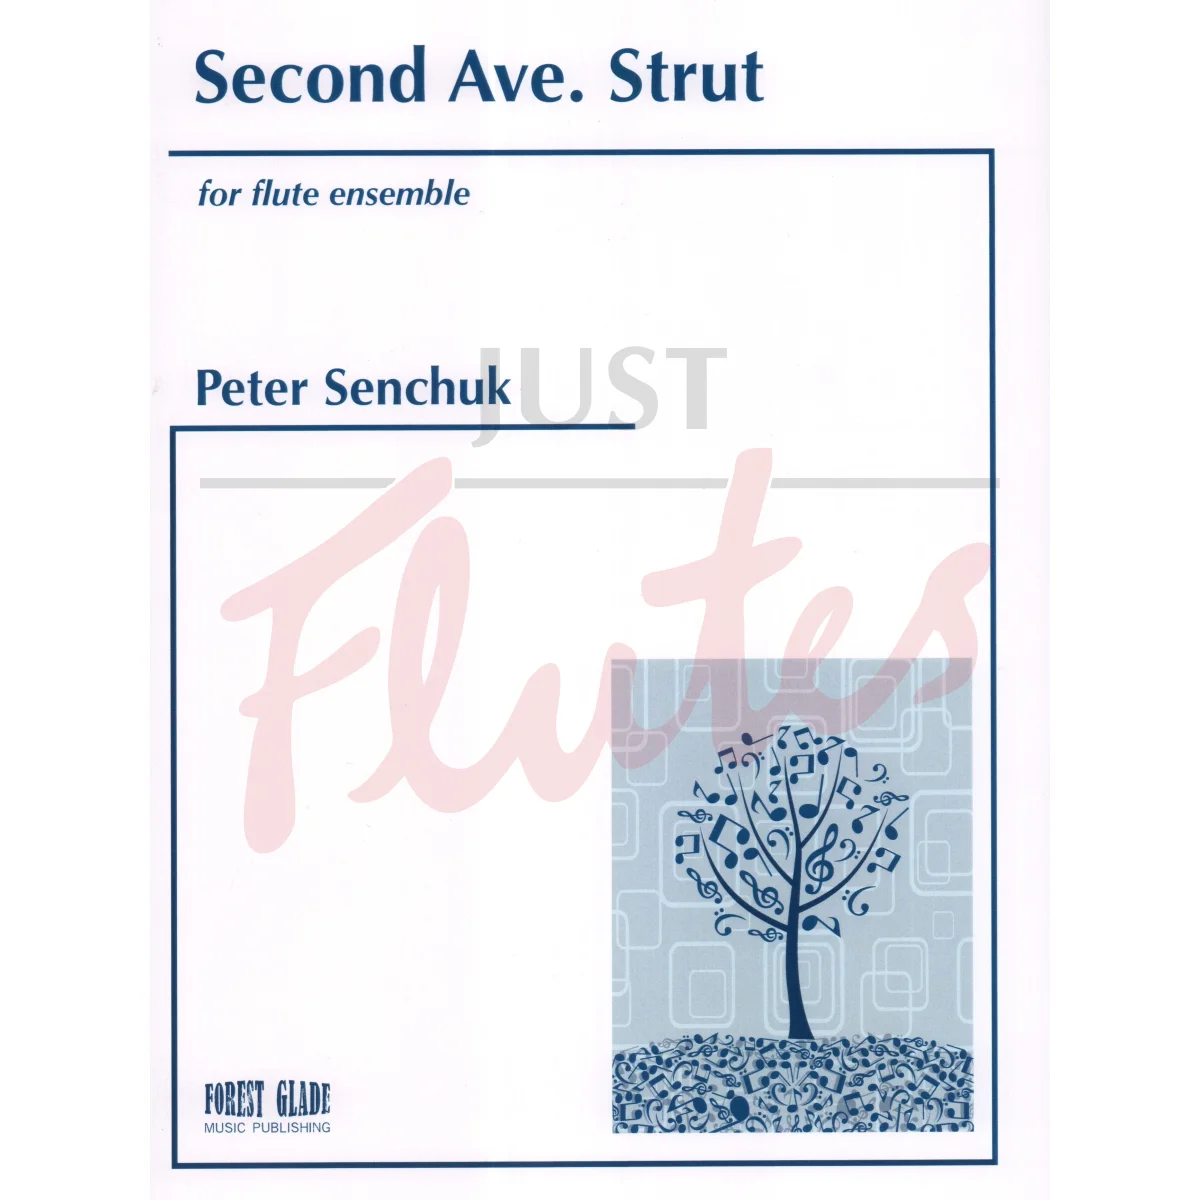 Second Ave. Strut for Flute Ensemble